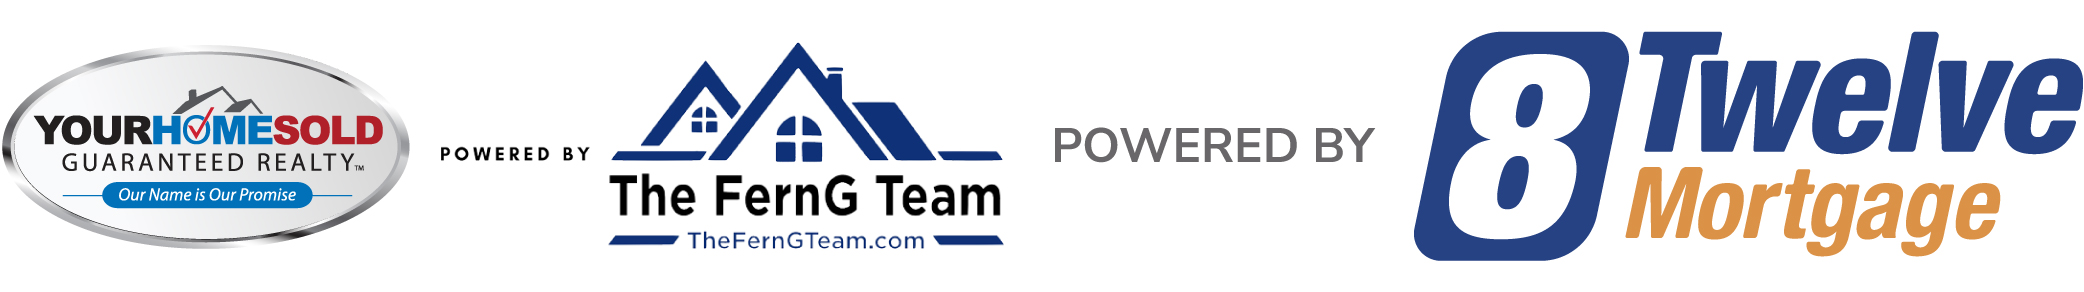 8Twelve-Mortgage_Rebrand-Partnership-Powered-By-Logos_YHSGR_FernG_Team_07-23